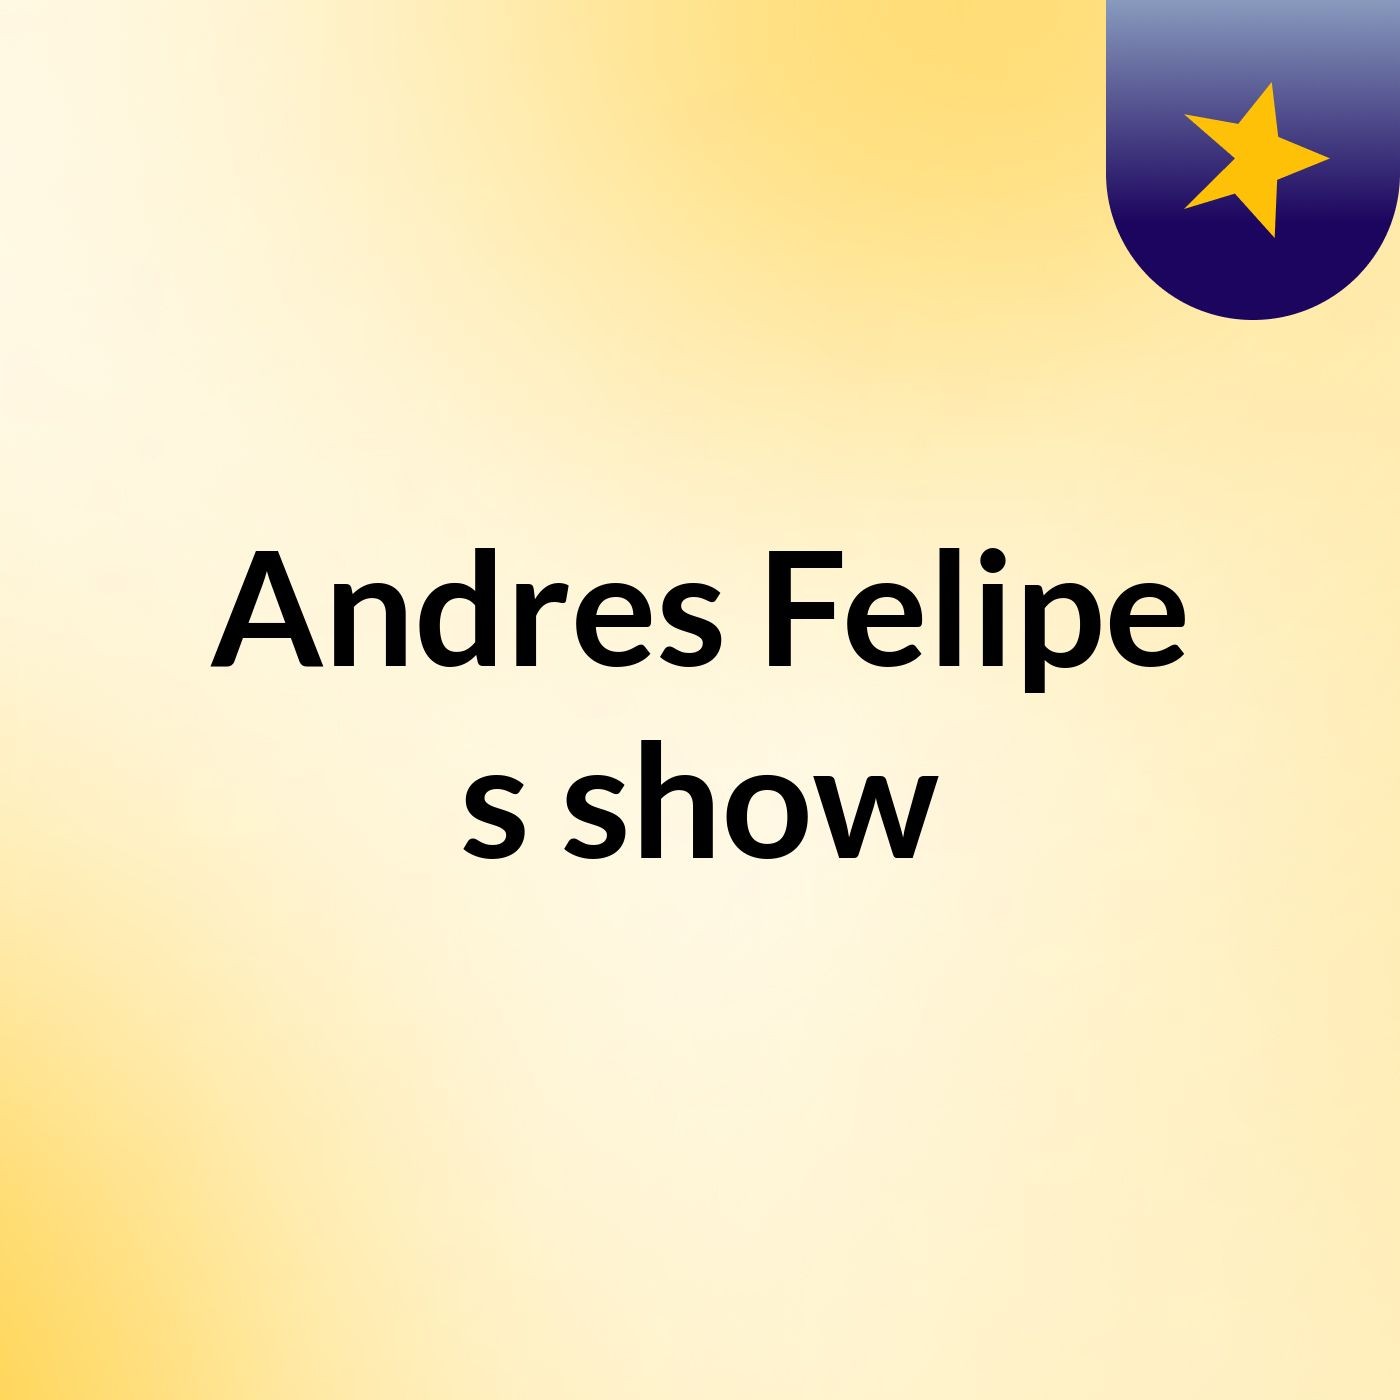 Andres Felipe's show